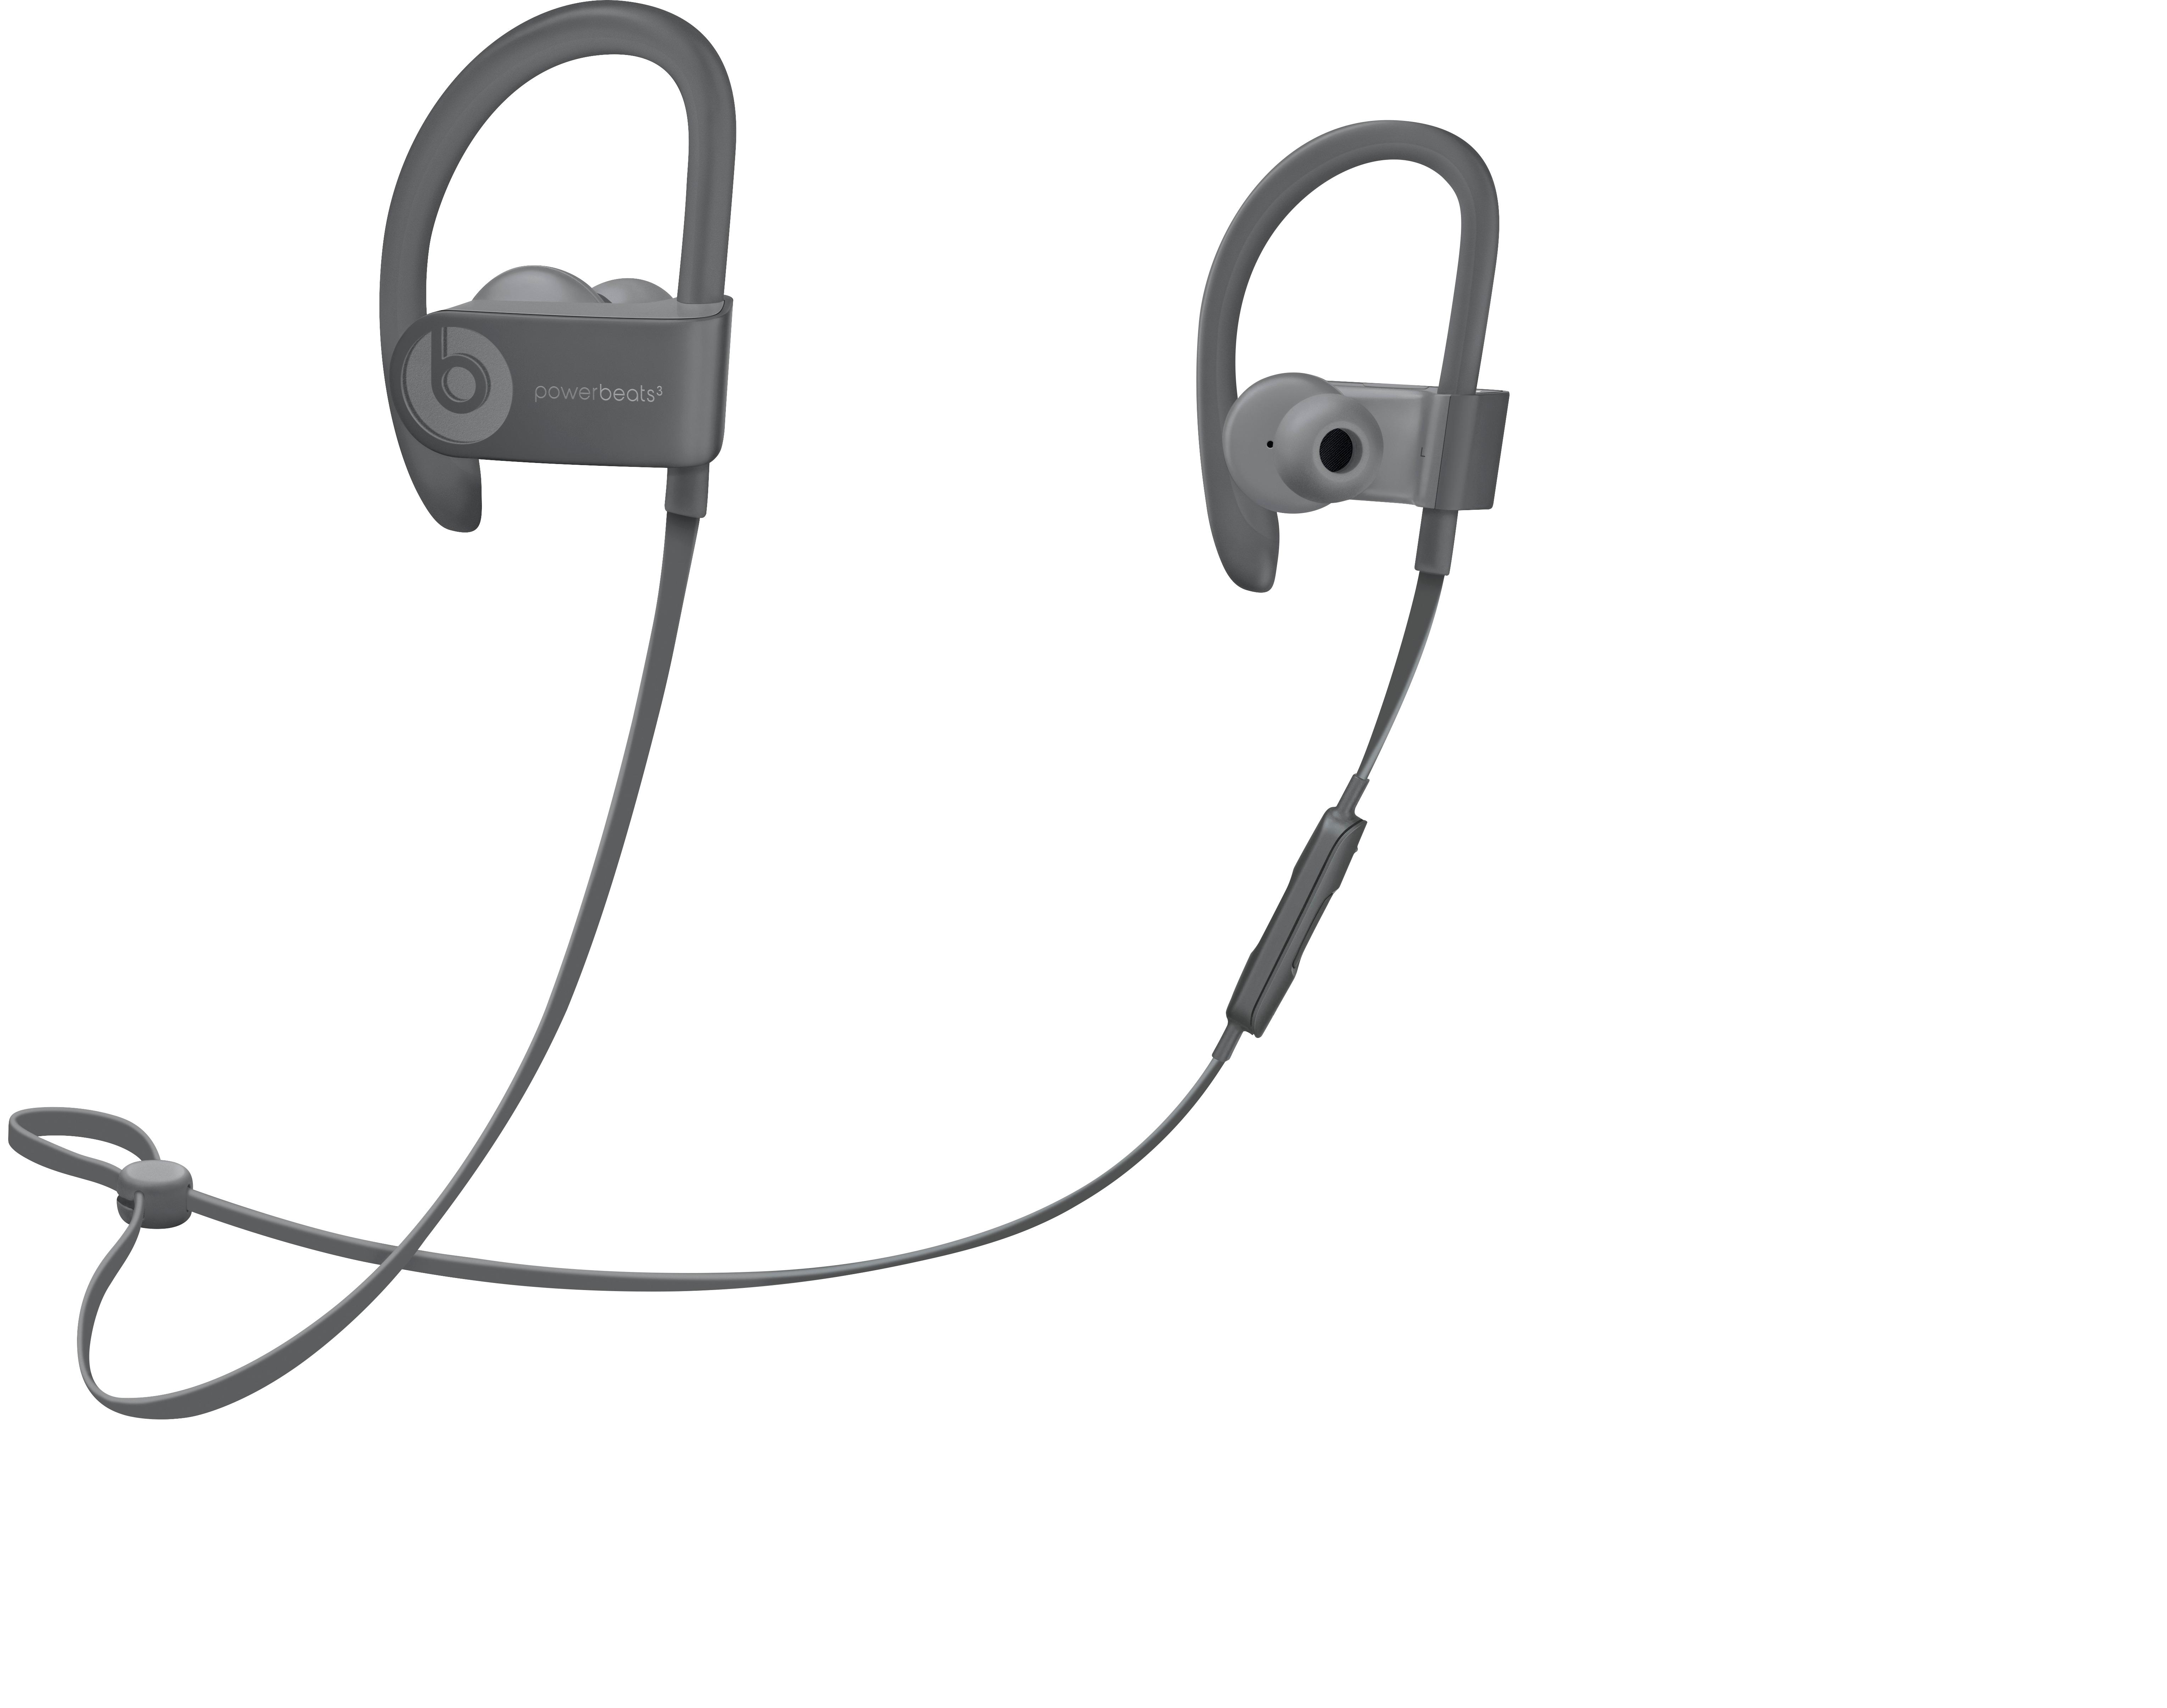 powerbeats3 wireless headphones